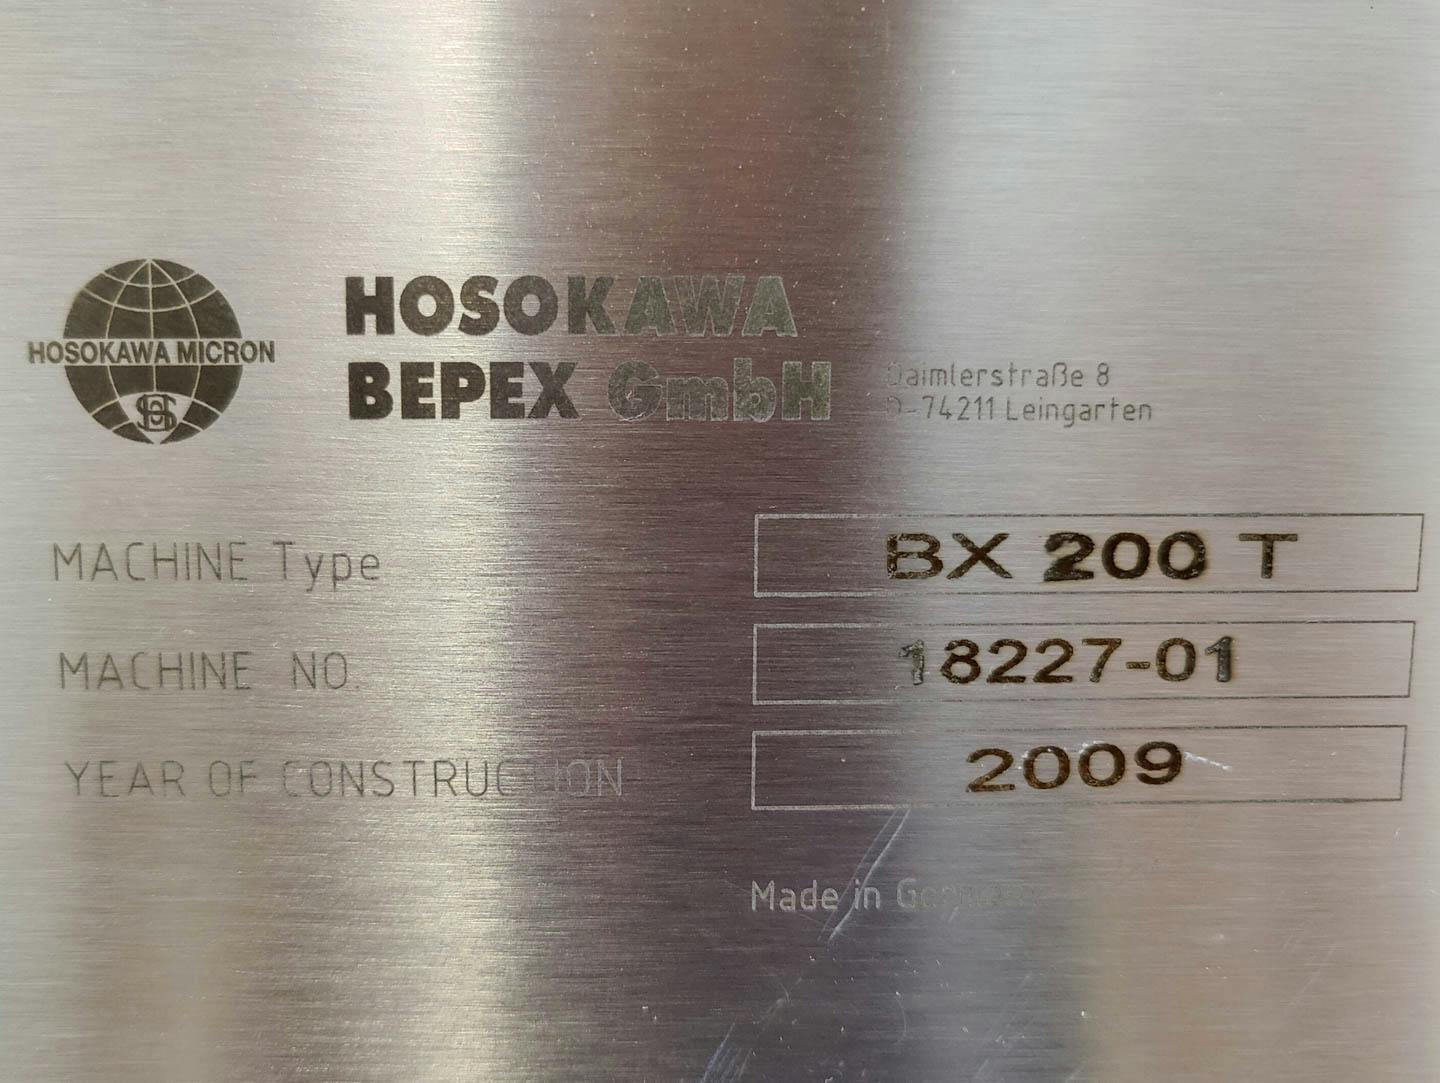 Hosokawa Bepex Bextruder BX-200 - Roll compactor - image 8